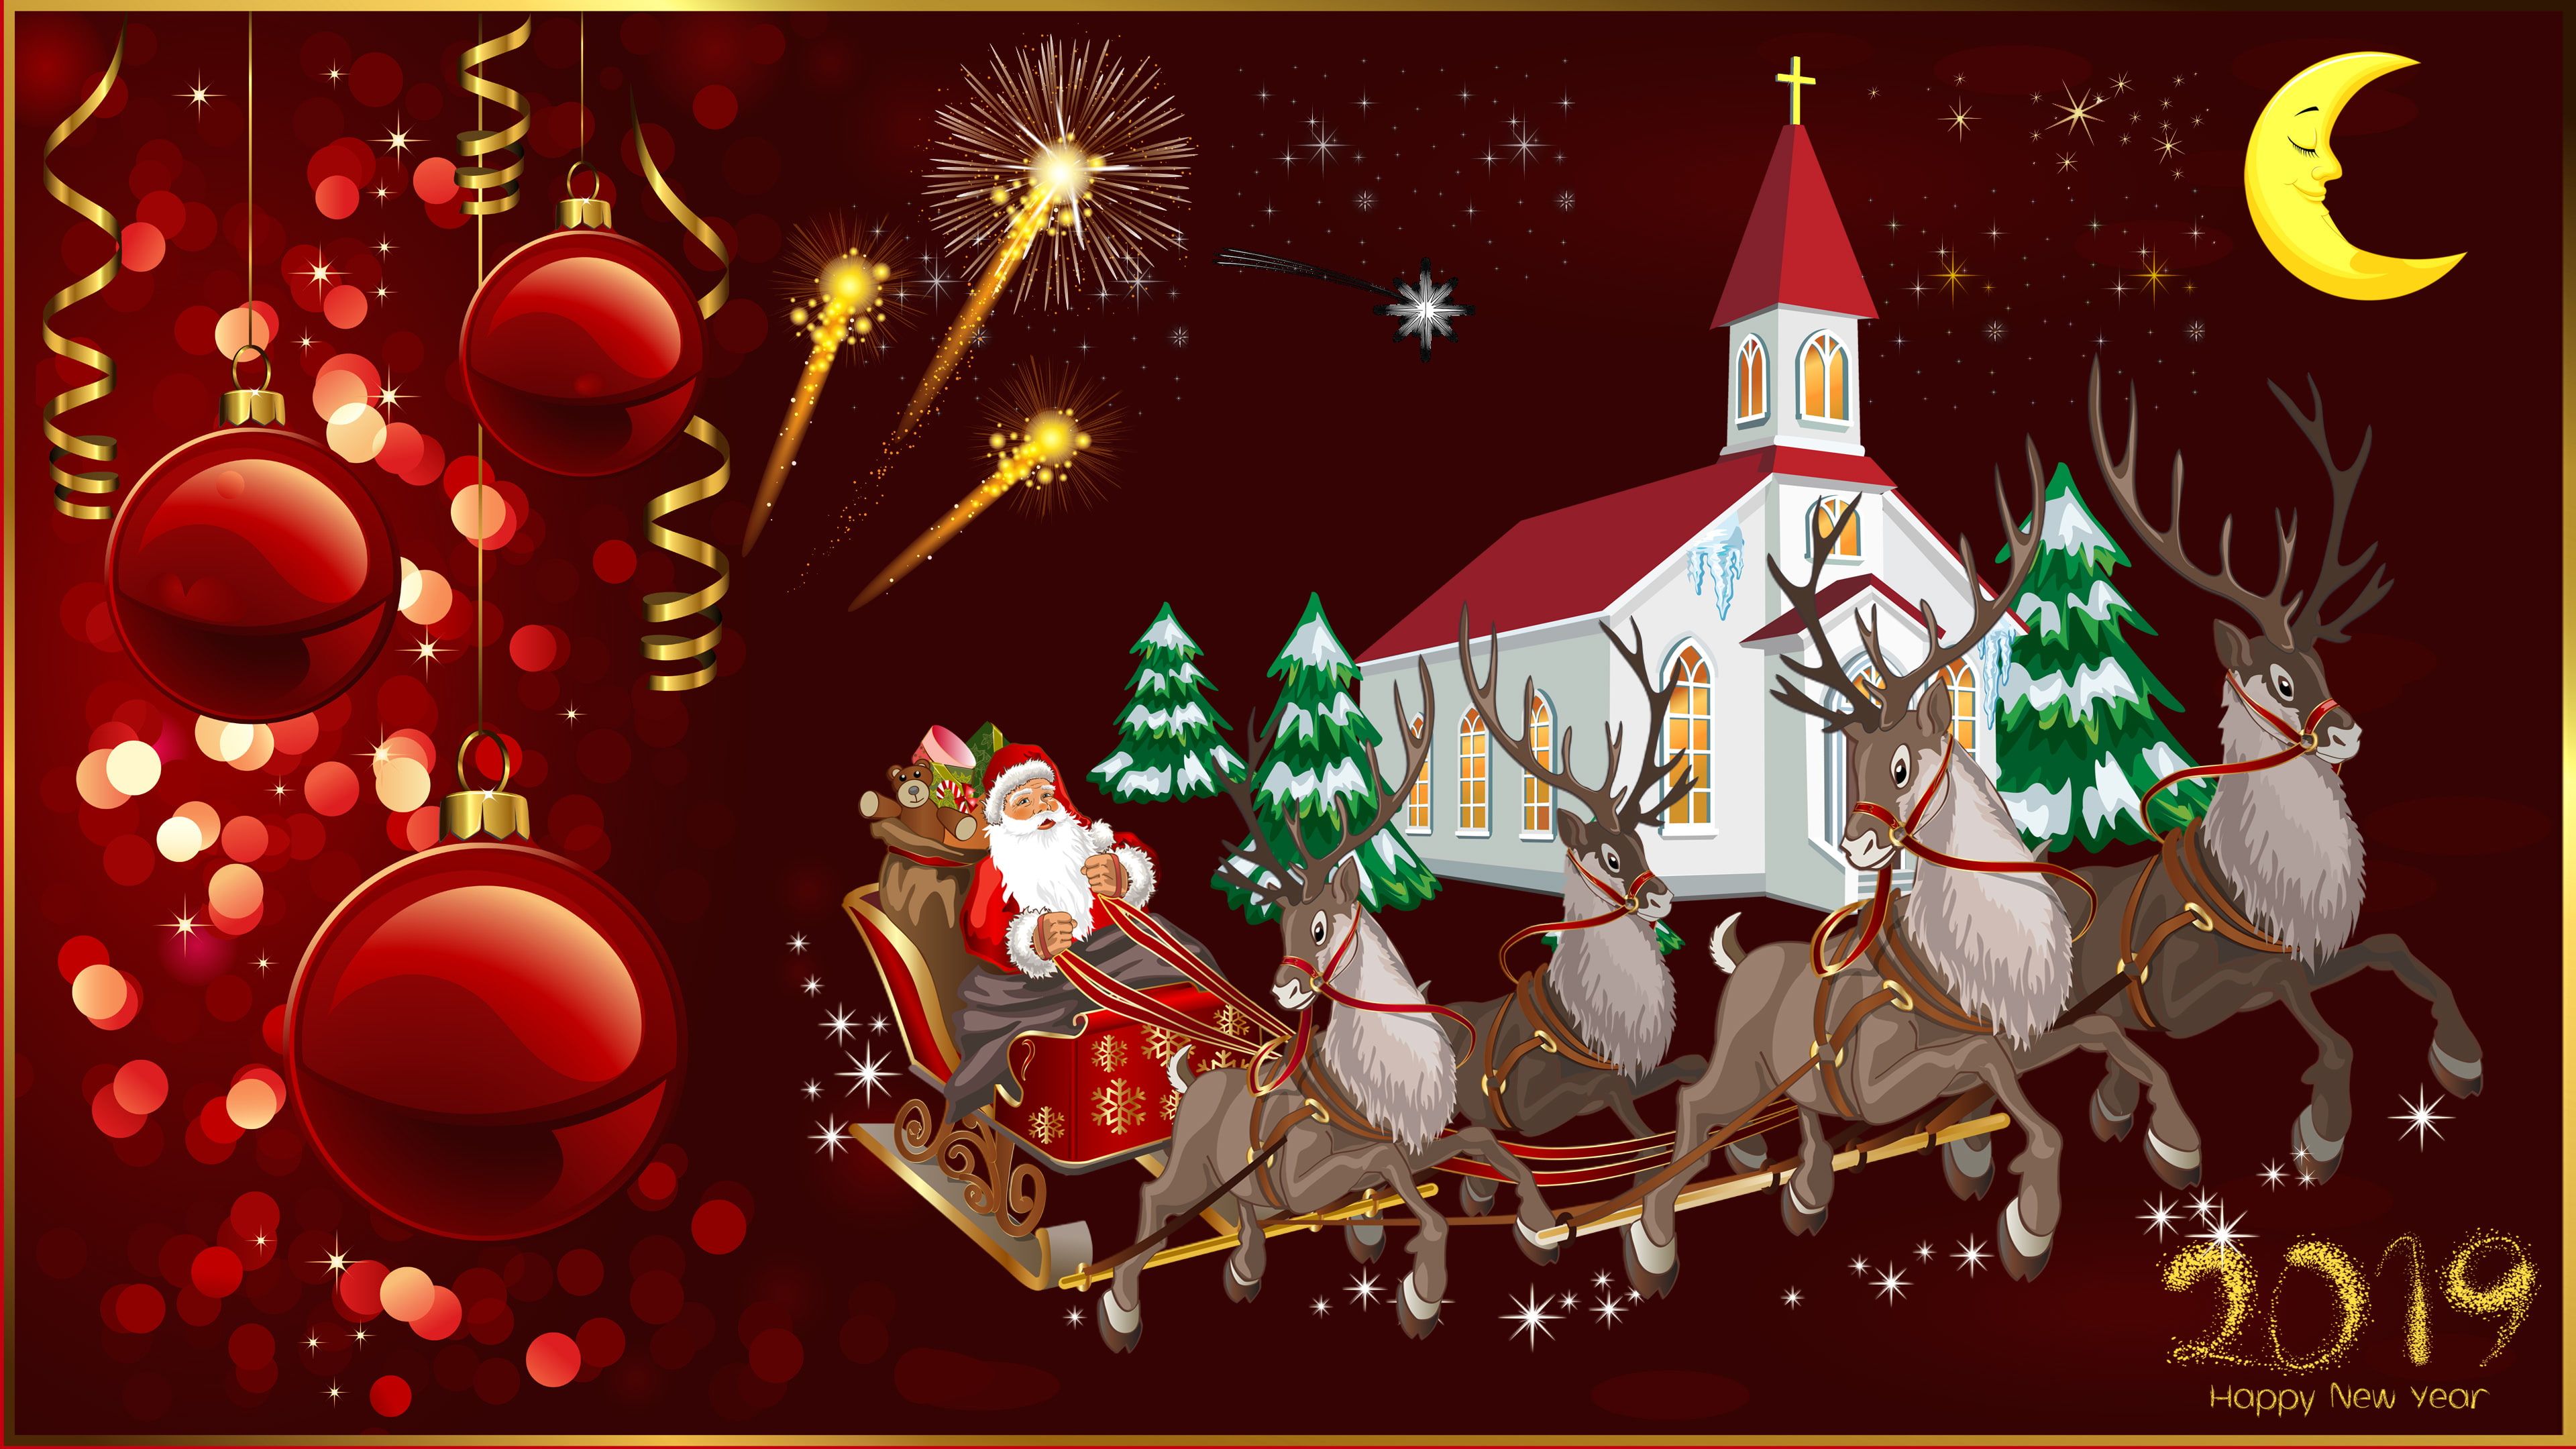 Happy New Year 2019 Merry Christmas Christmas Greeting Card Santa